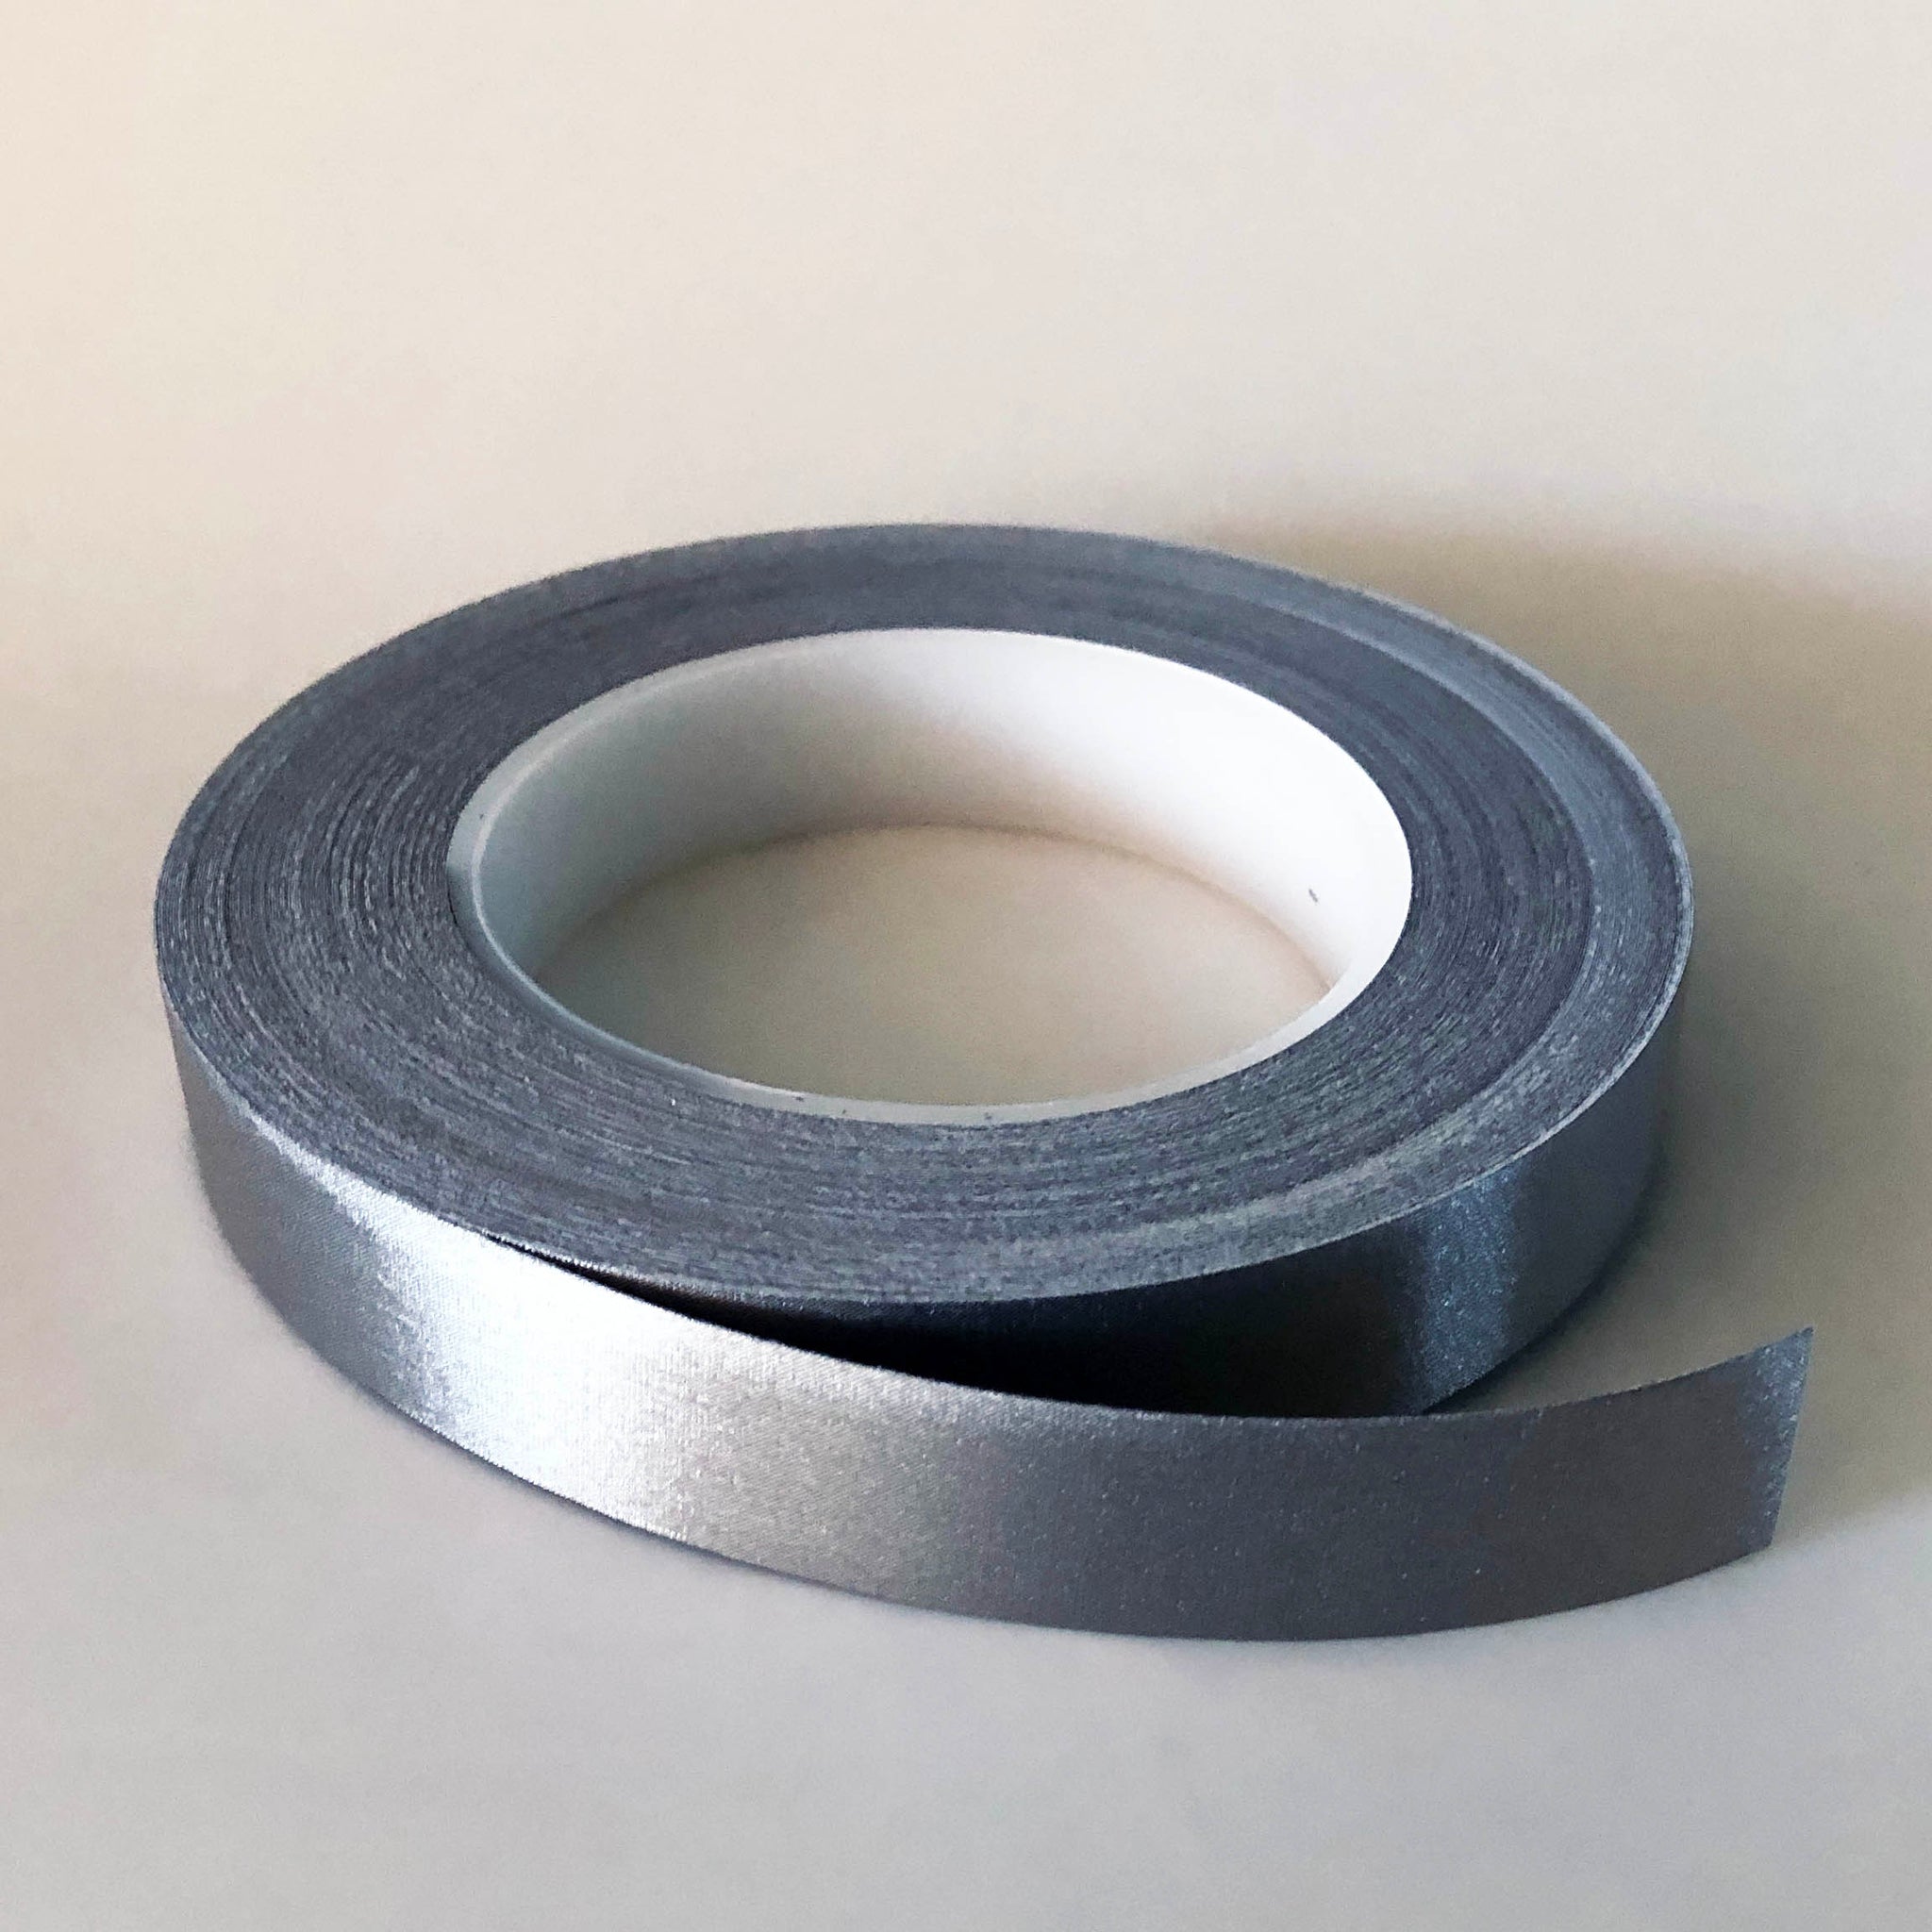 b. Fabric Conductive Tape 30 meter roll – TapeBlock